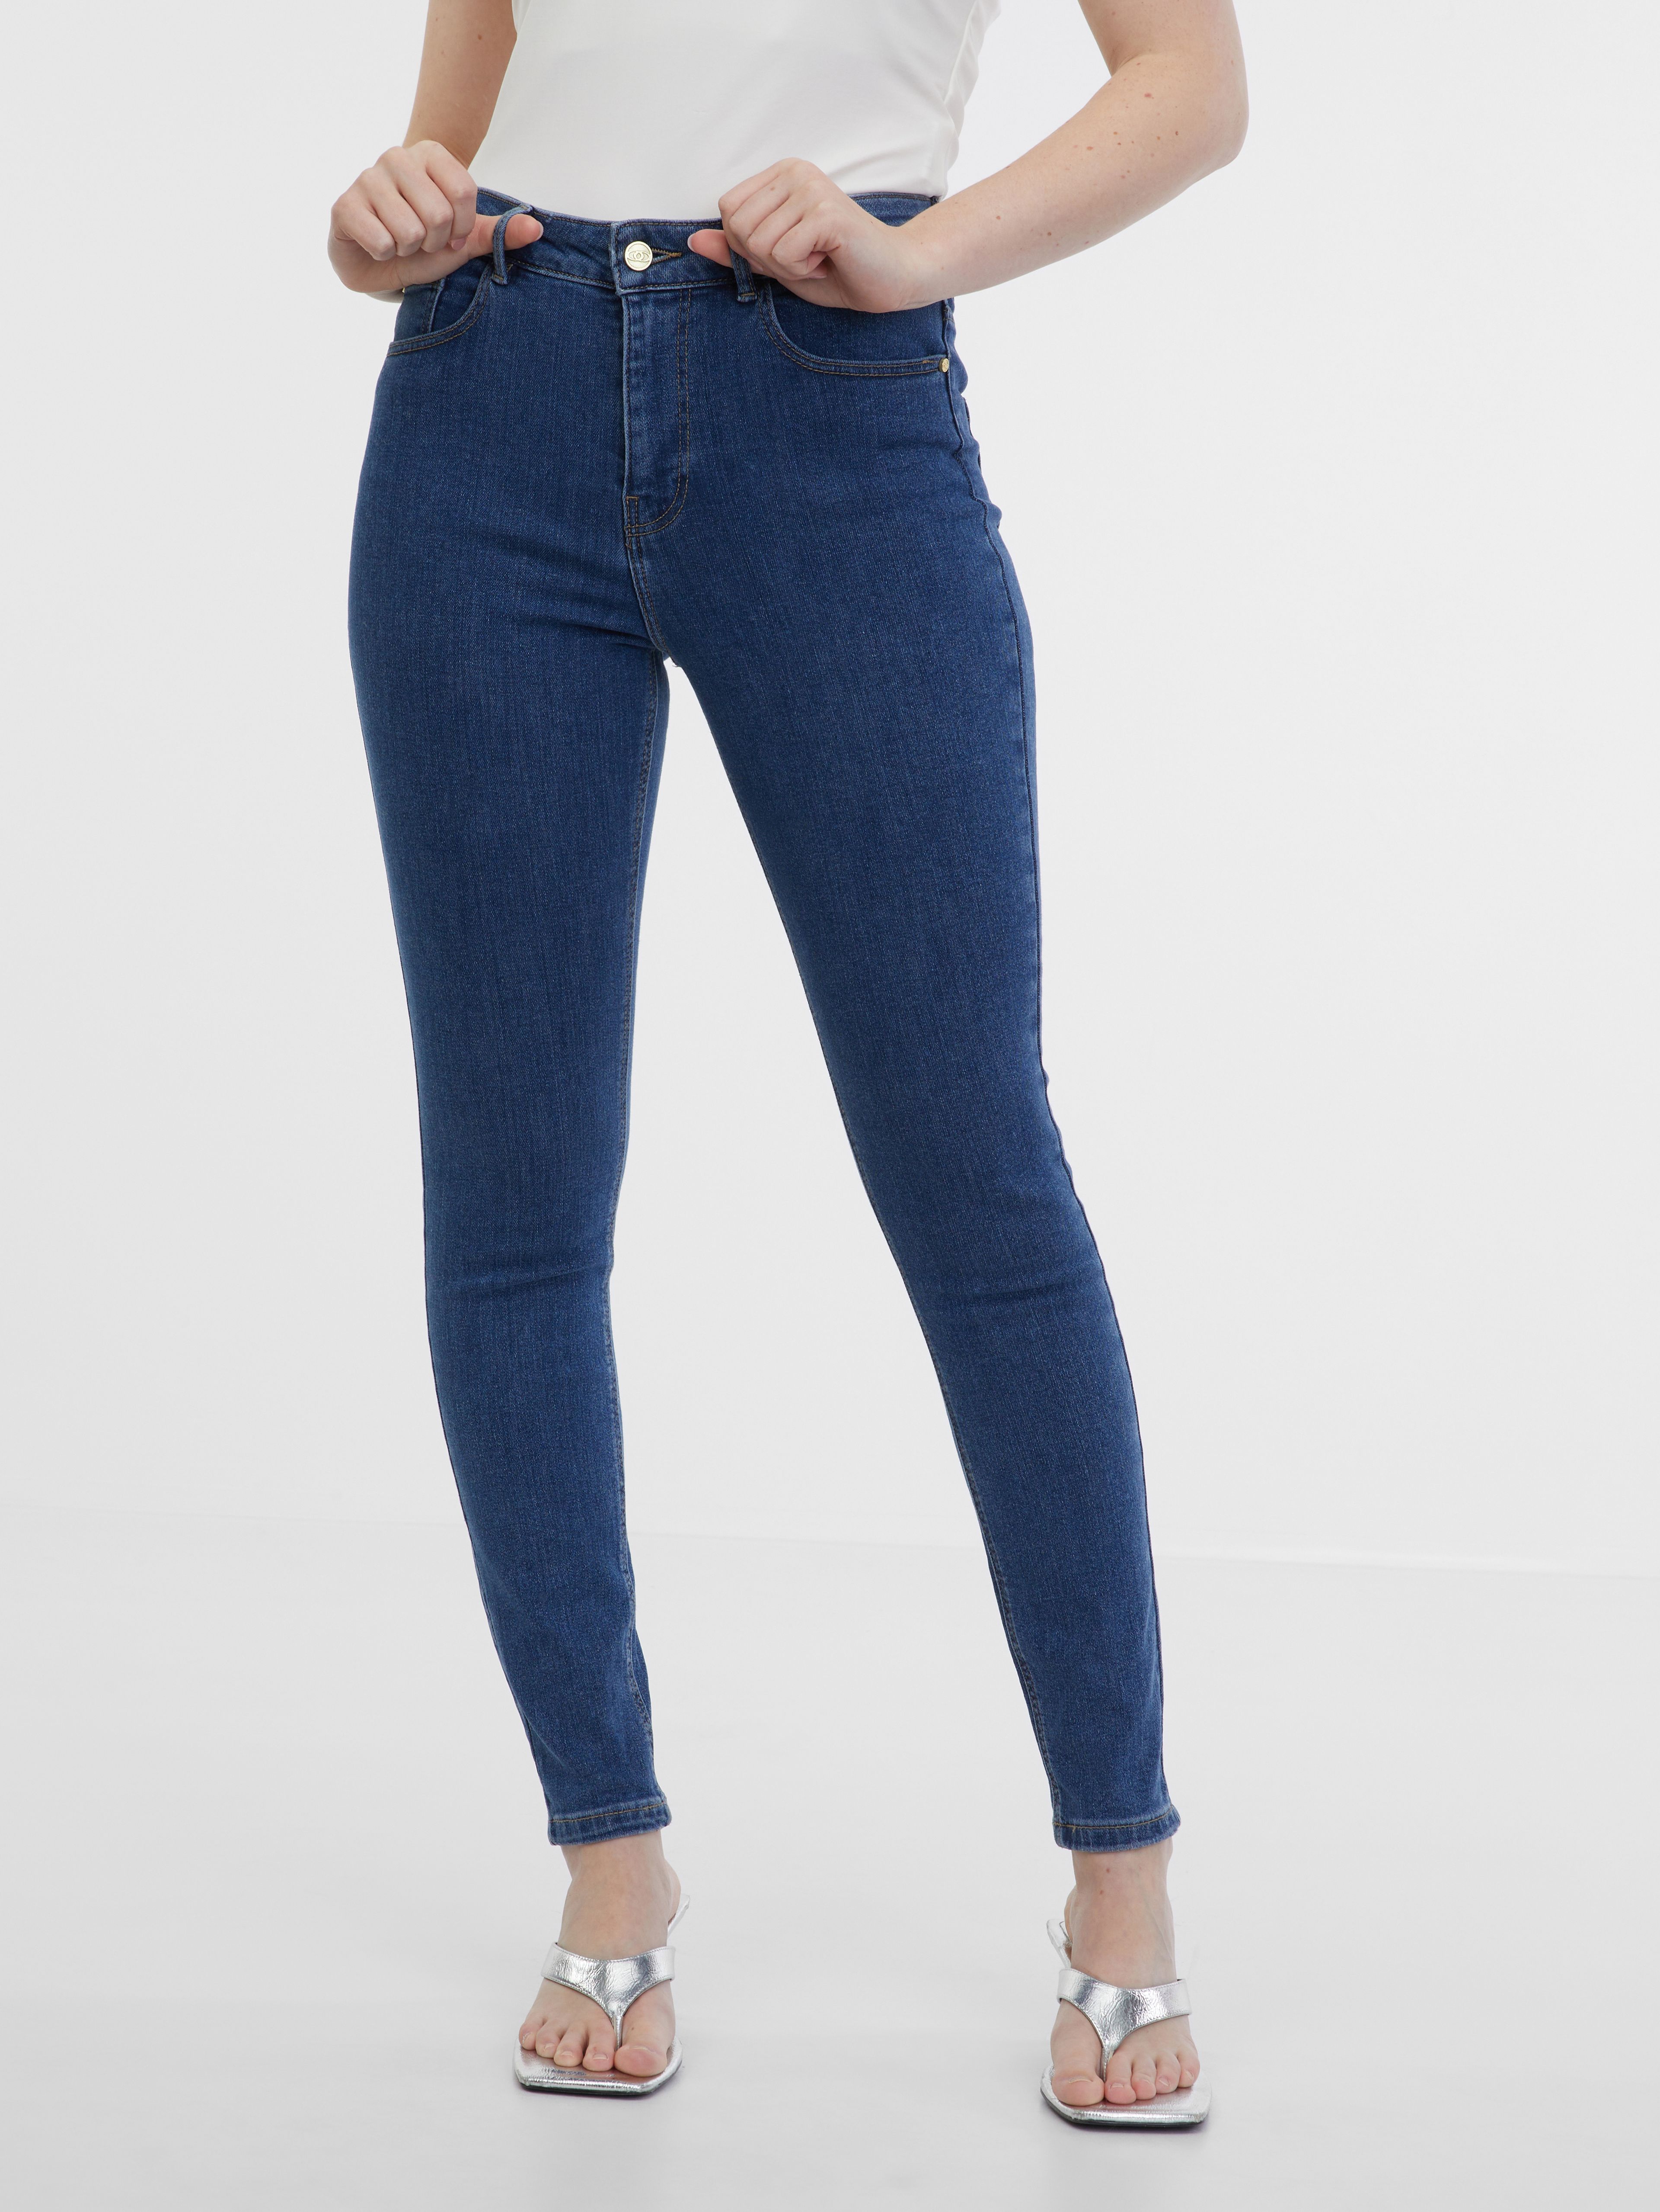 Niebieskie jeansy damskie skinny fit ORSAY